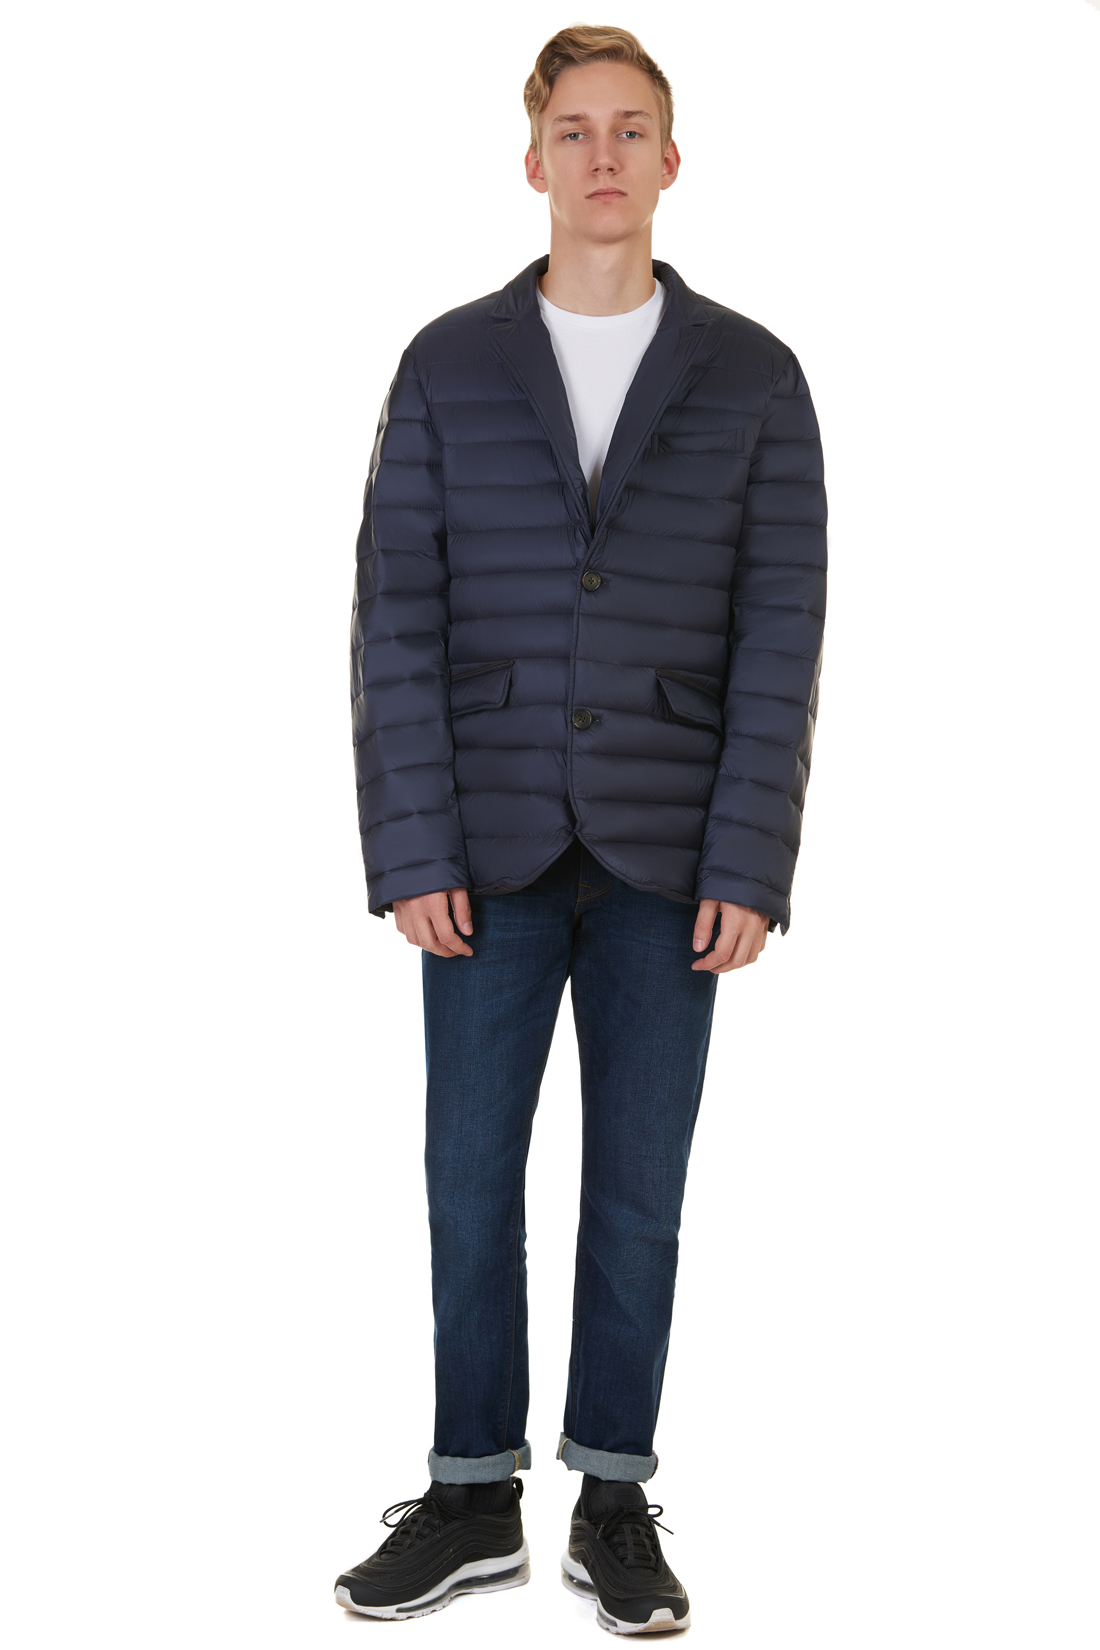 Куртка-пиджак (арт. baon B537561), размер XL, цвет синий Куртка-пиджак (арт. baon B537561) - фото 5